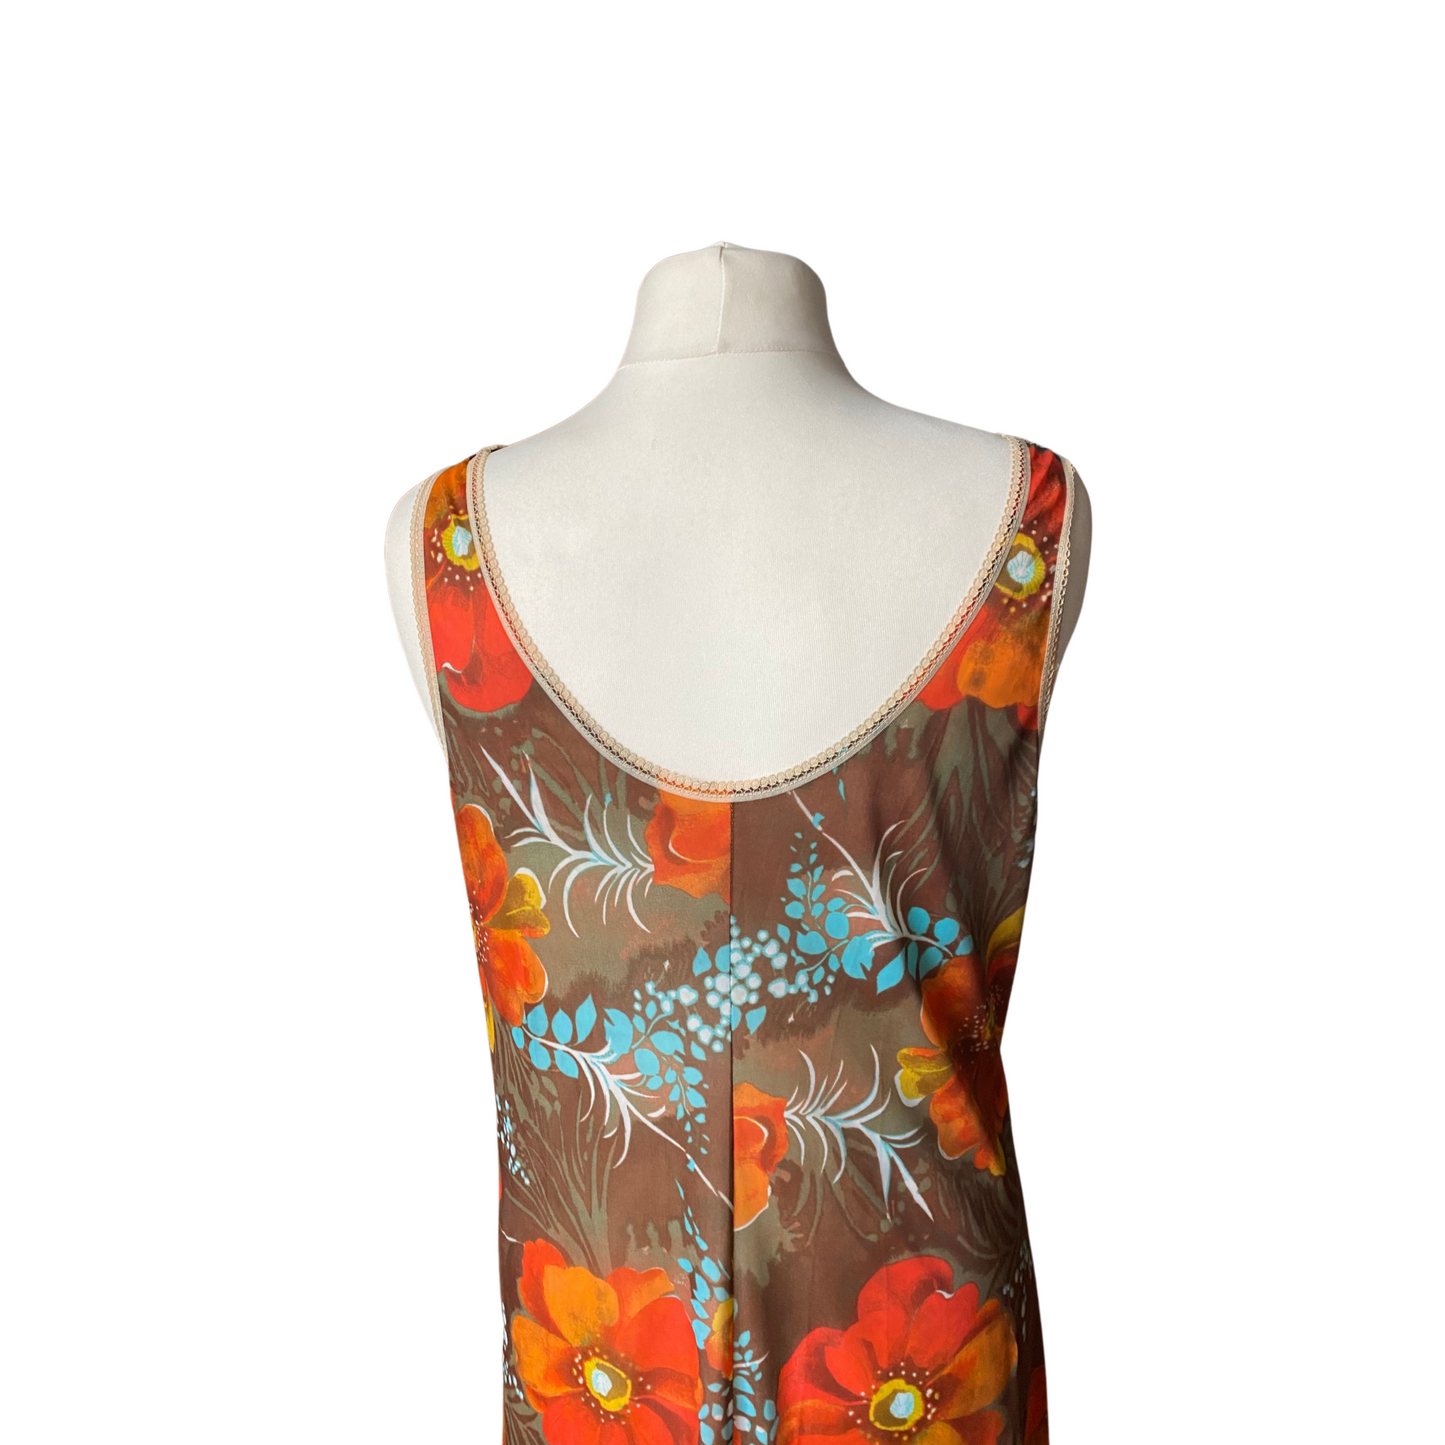 70s orange flower print, lace trimmed slip dress. Approx UK size 18-20